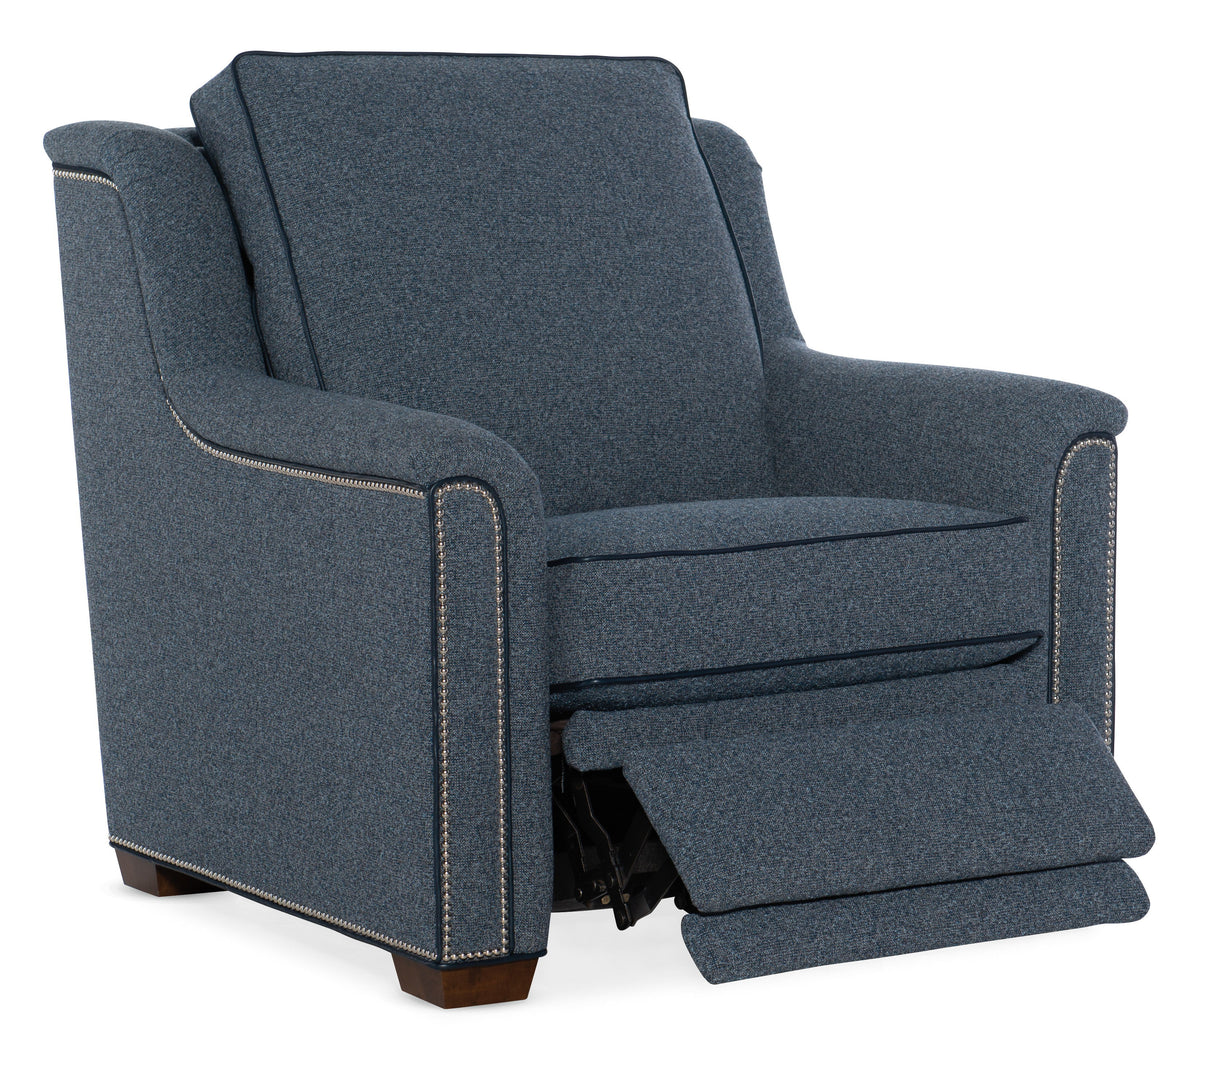 Raiden - Chair Full Recline With Articulating Headrest